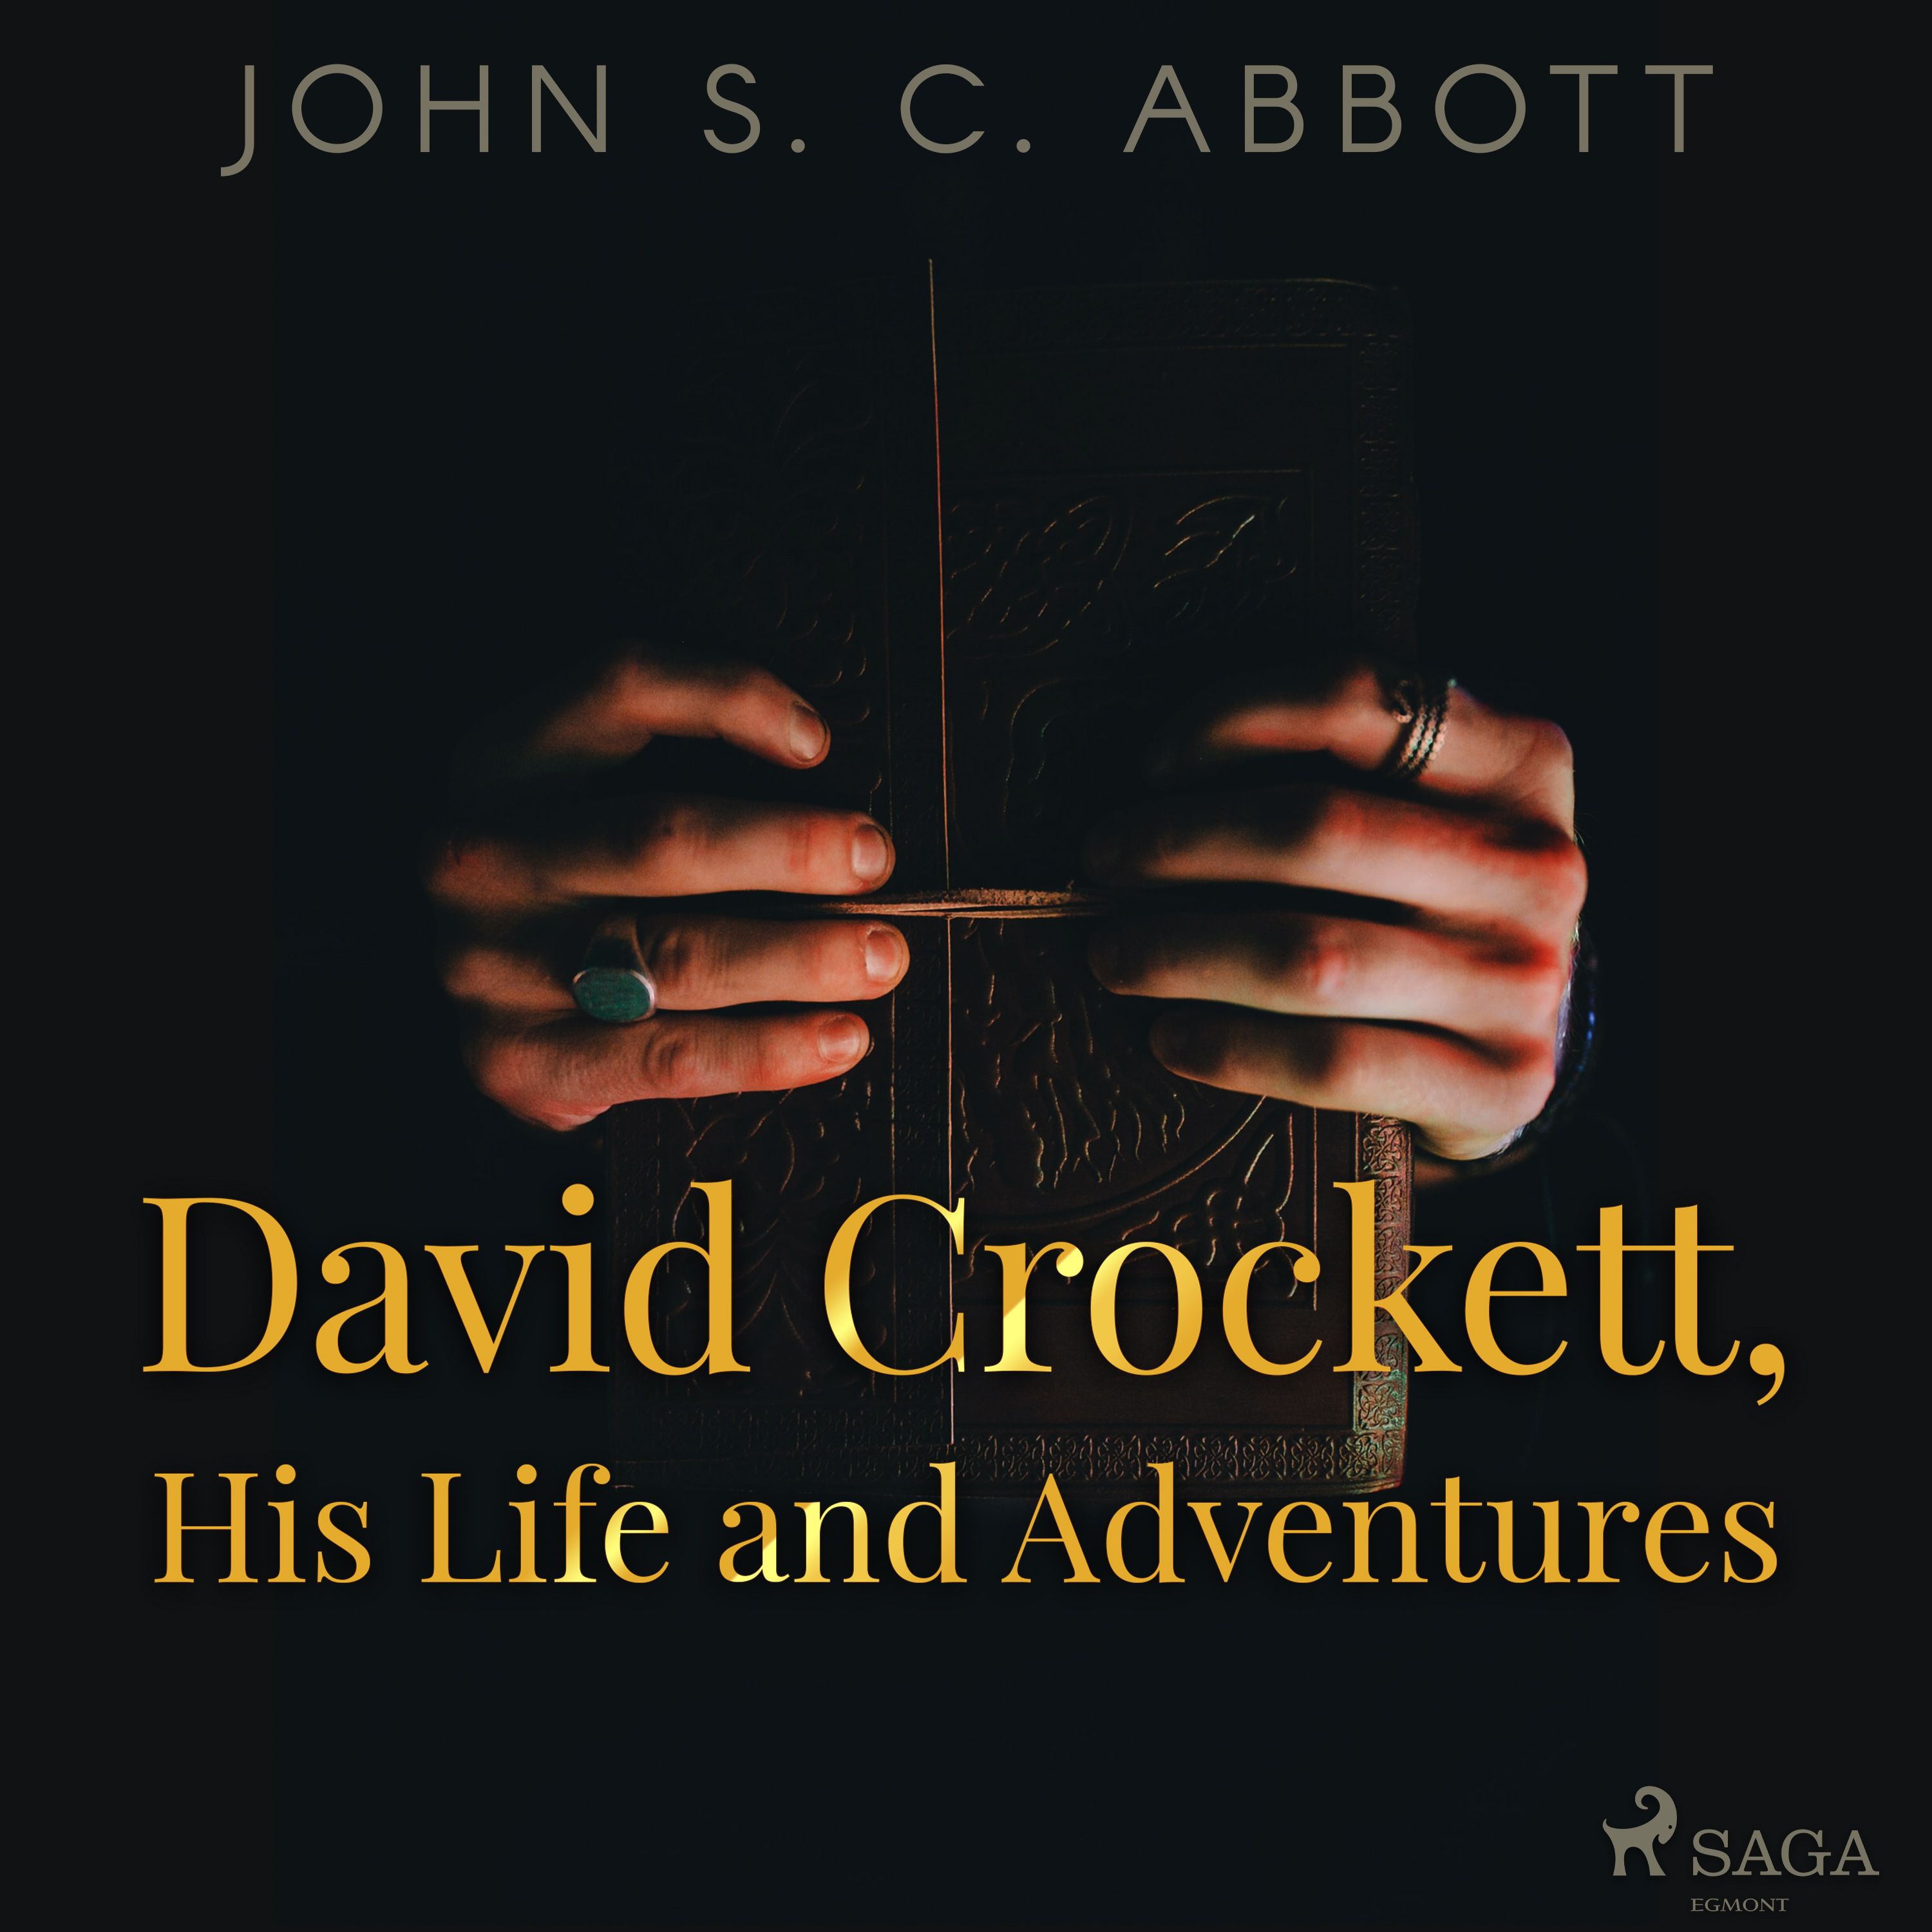 David Crockett, His Life and Adventures, audiobook by John S. C. Abbott